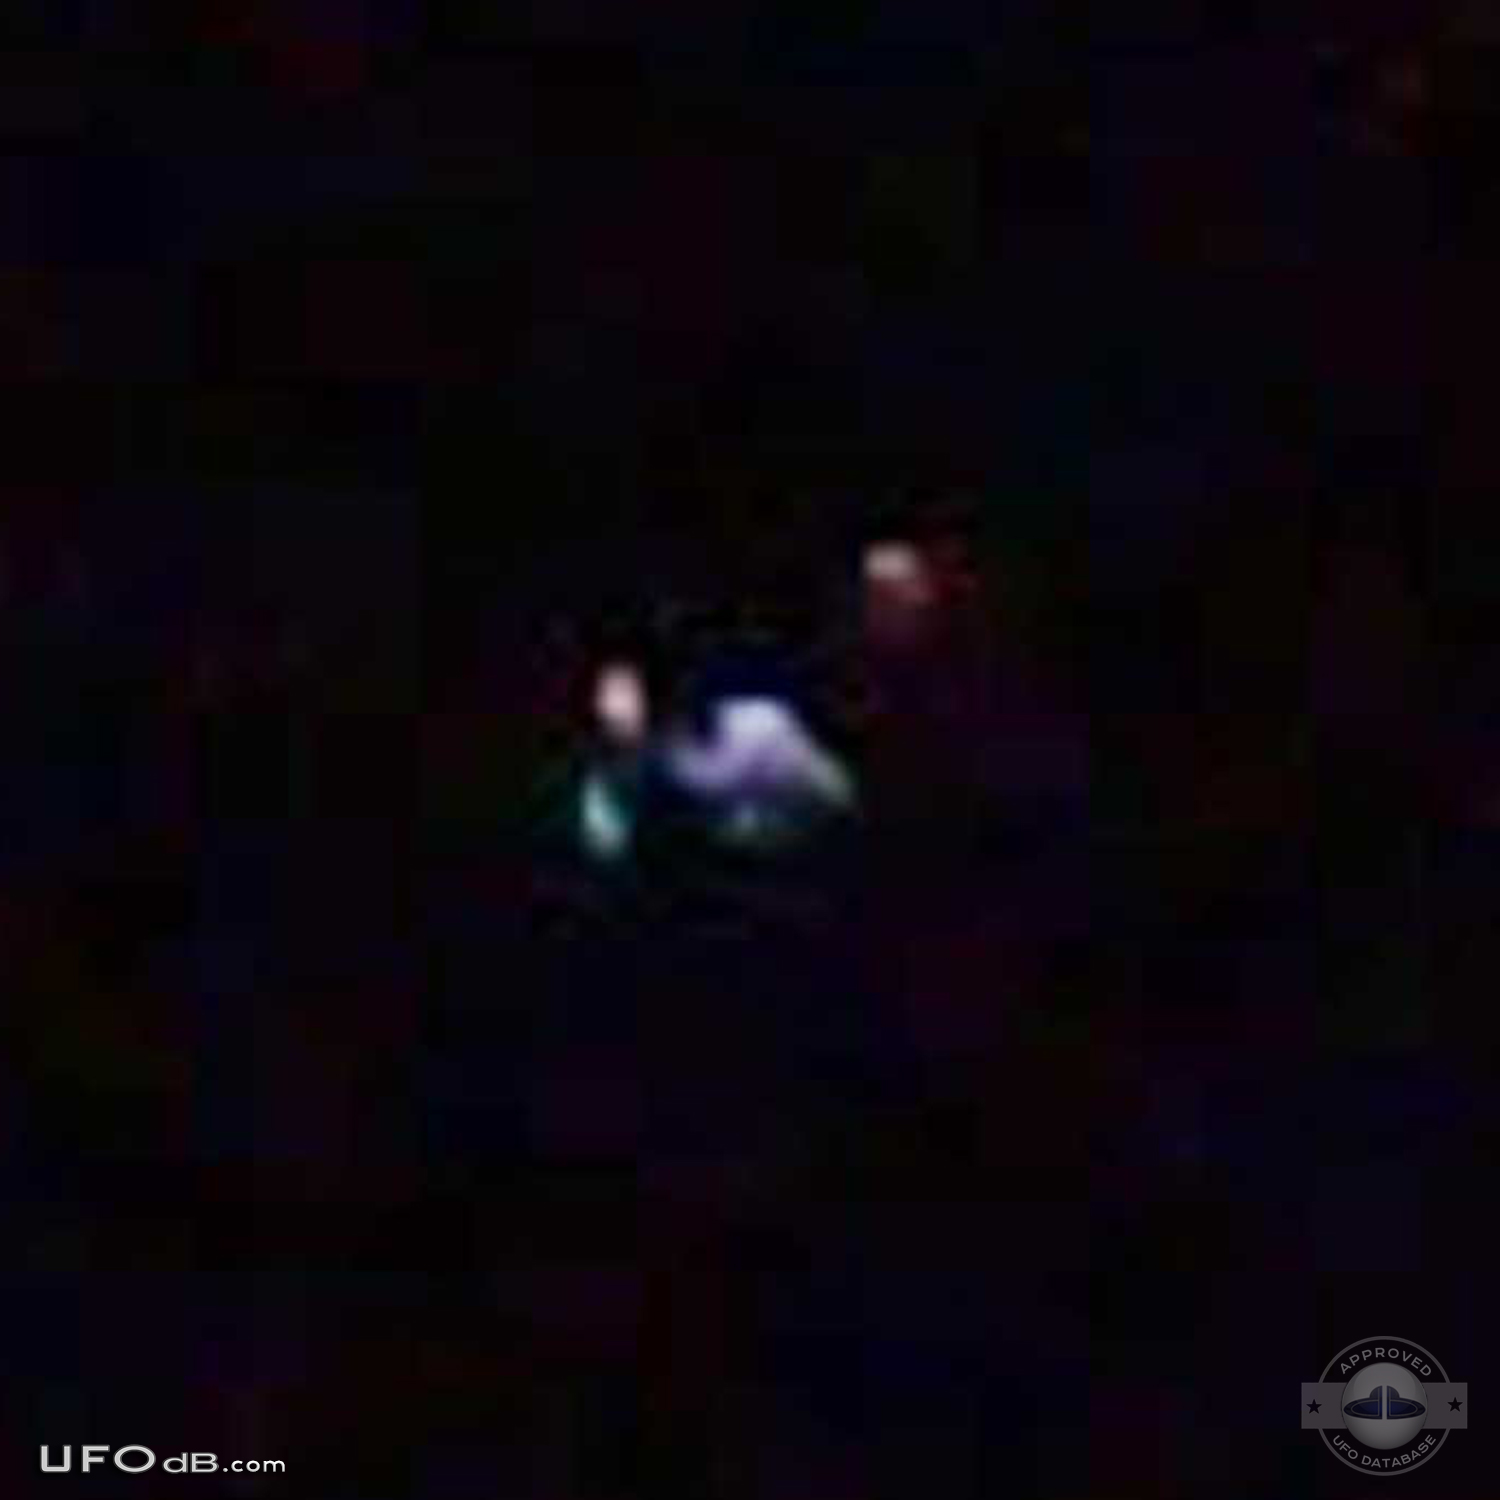 UFO with strange shape caught on picture over Santa Tecla, El Salvador UFO Picture #387-2